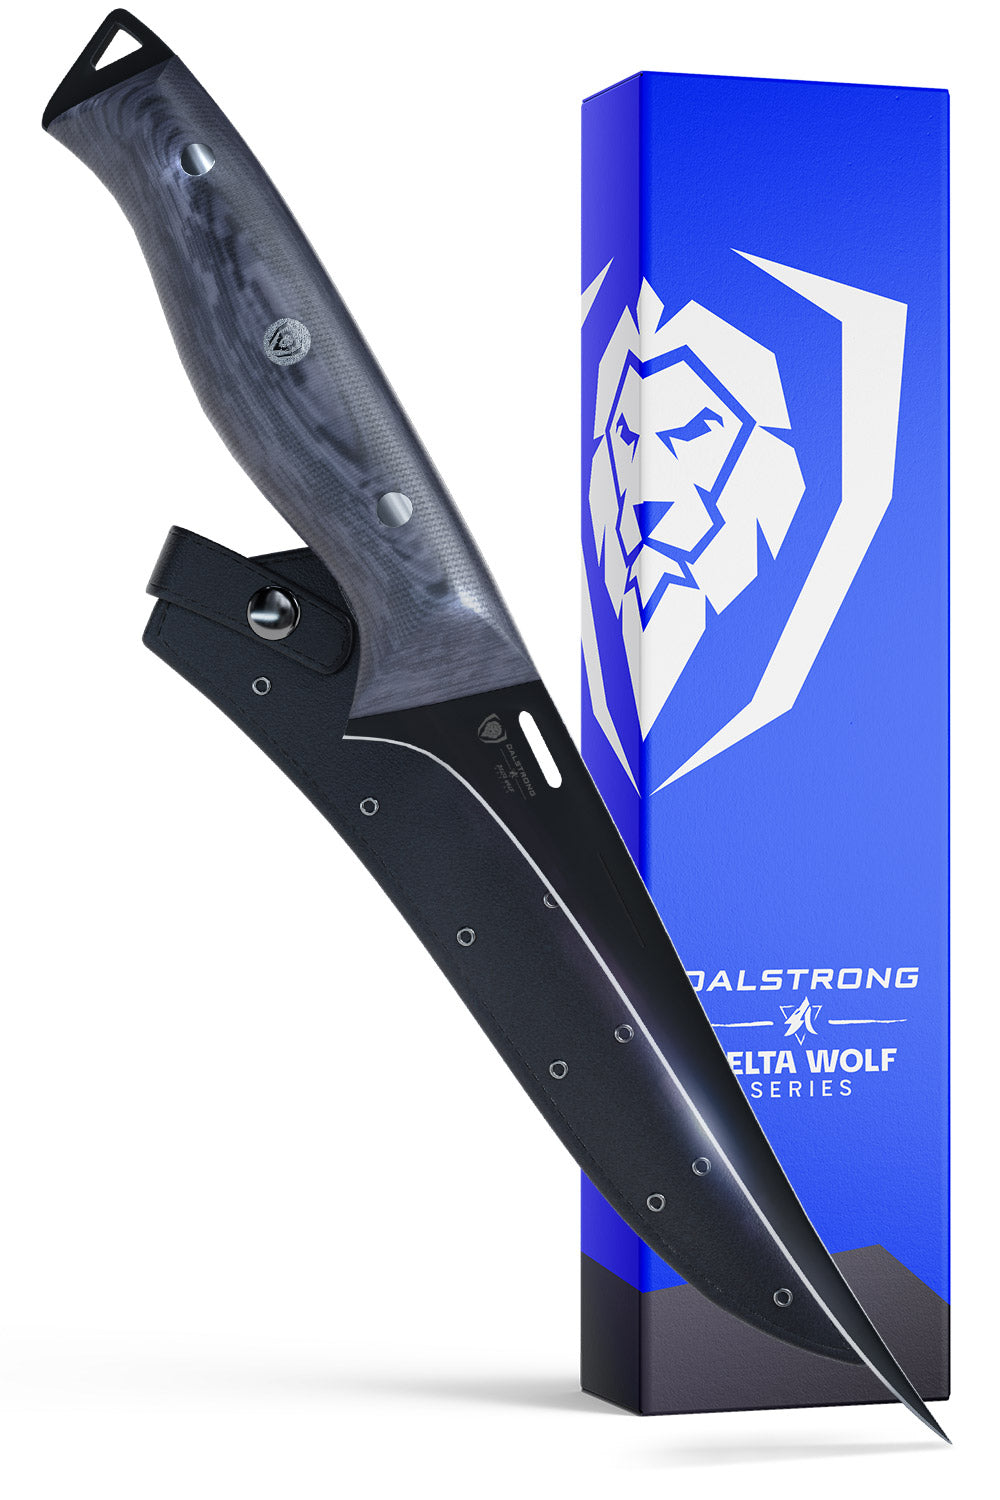 Dalstrong Fillet Knife - 6 inch - Delta Wolf Series Knife - Ultra-Thin & Zero Friction Blade - Black Titanium Nitride Coating - Boning Knife - G10